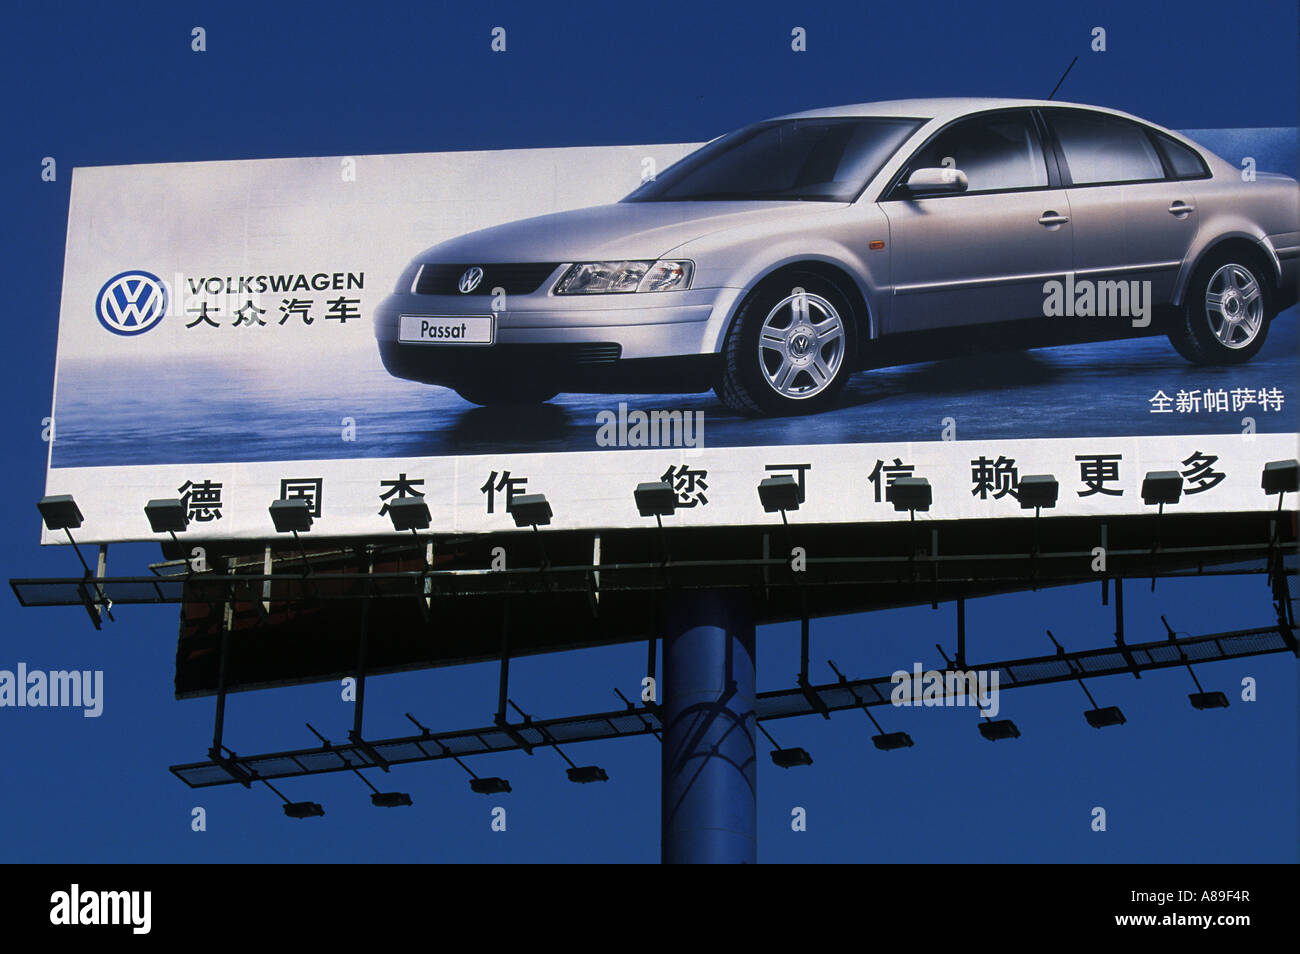 Volkswagen advertising in Peking, China. Stock Photo